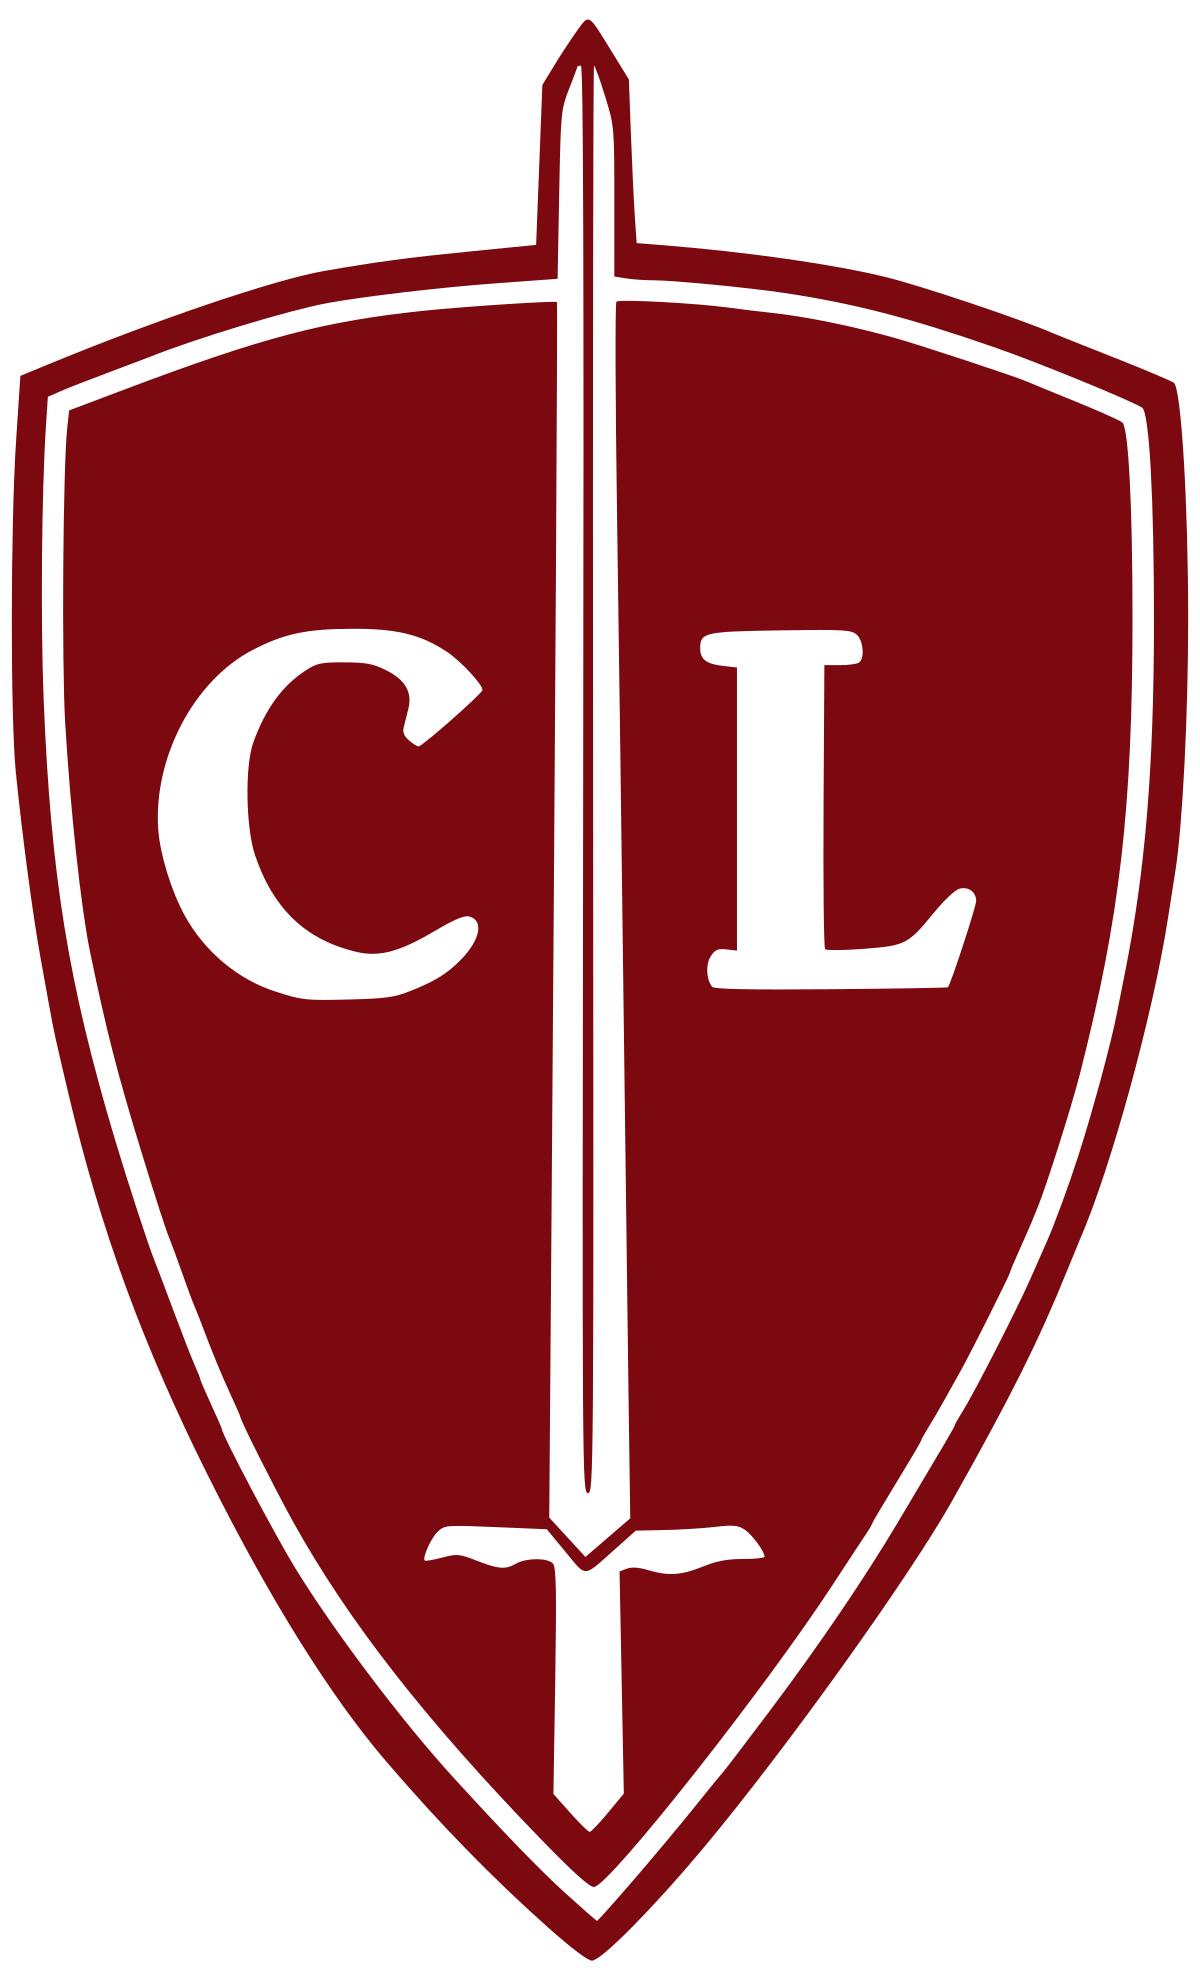 Catholic League (U.S.)